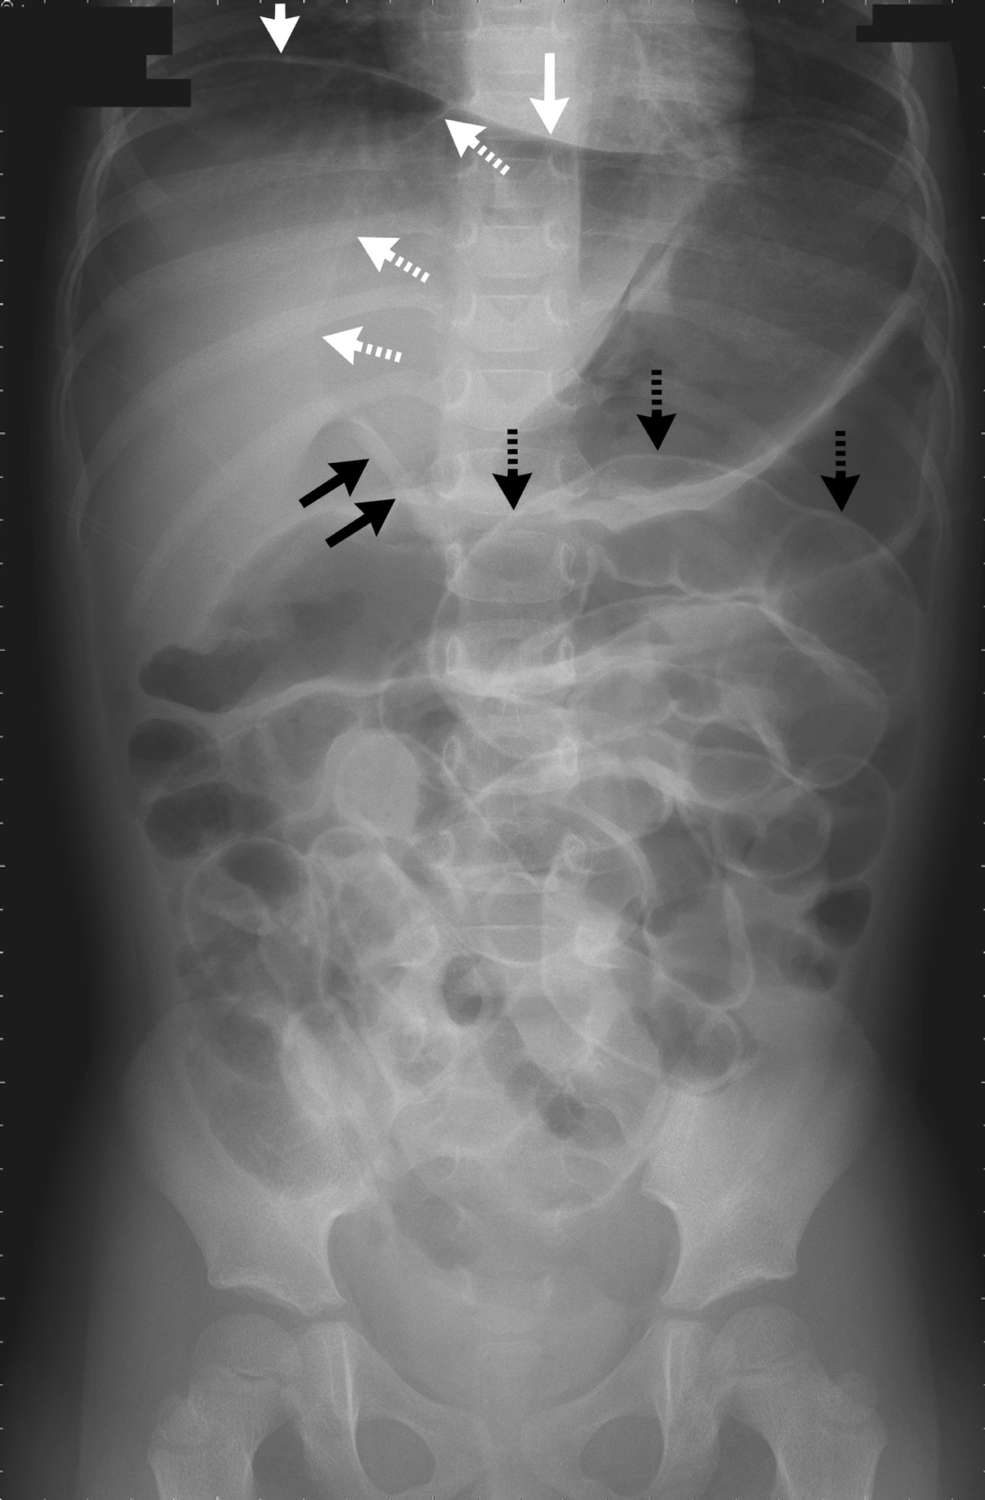 Signs of Pneumoperitoneum on Abdominal X-Ray